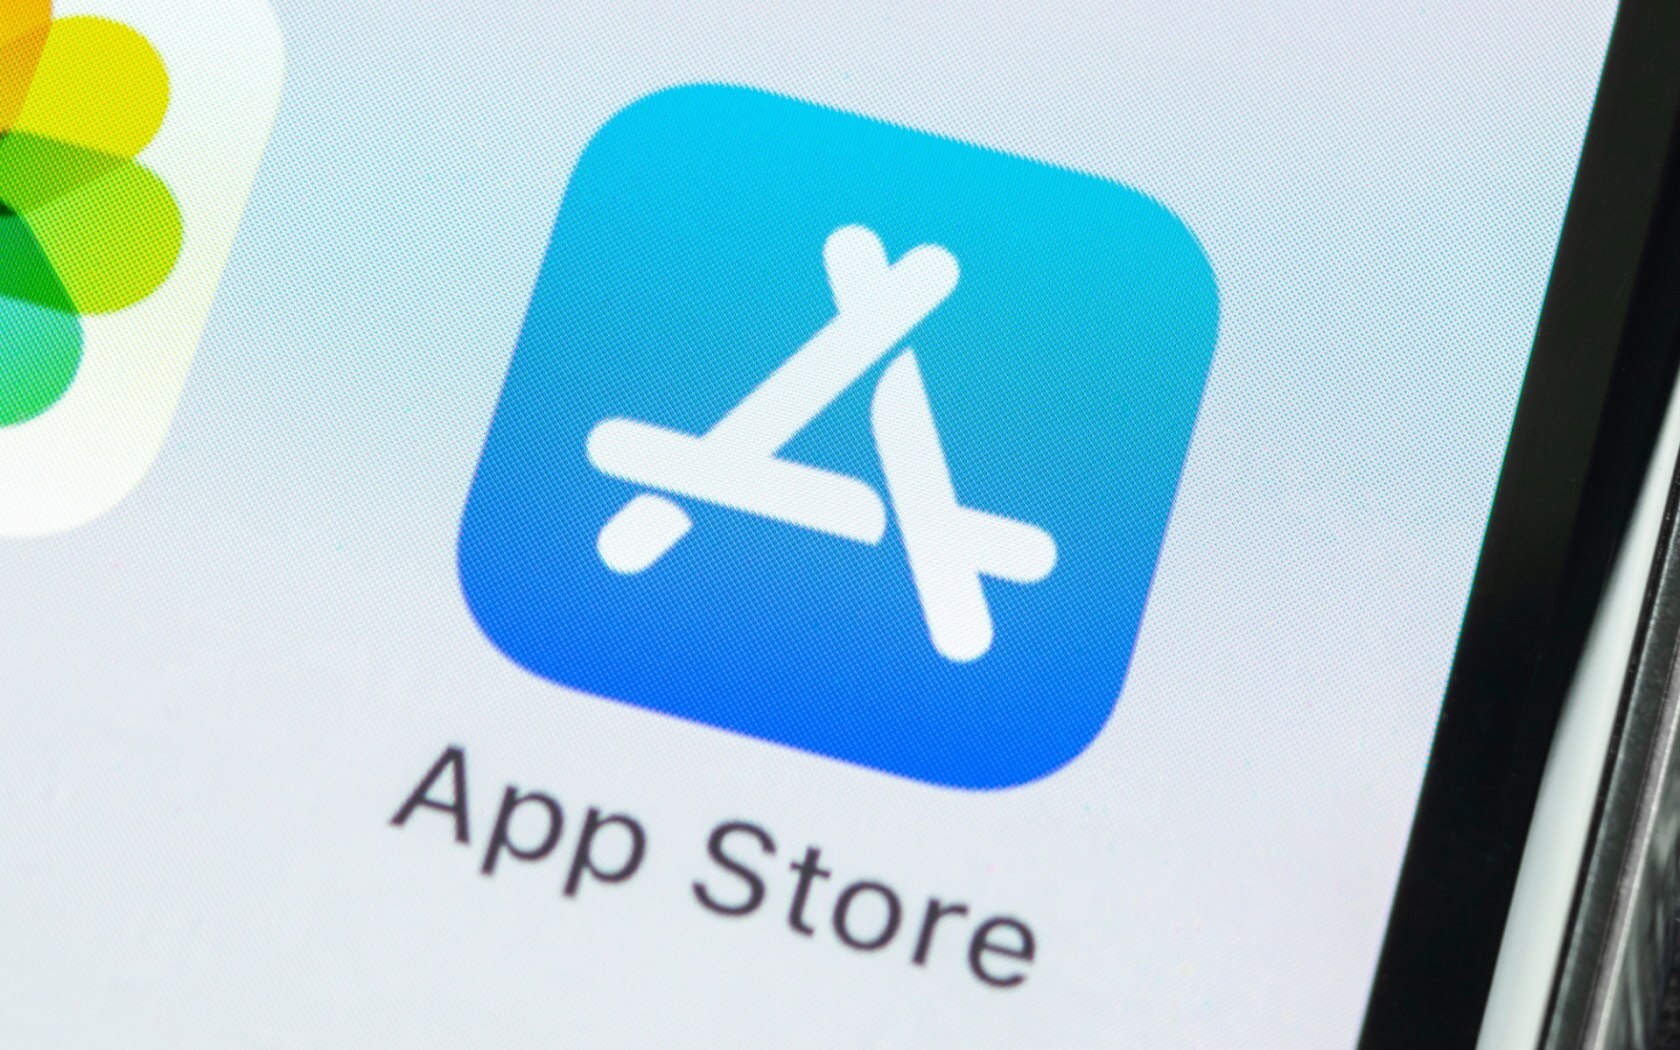 Apple's App Store saw $1.8 billion in spending during Christmas week